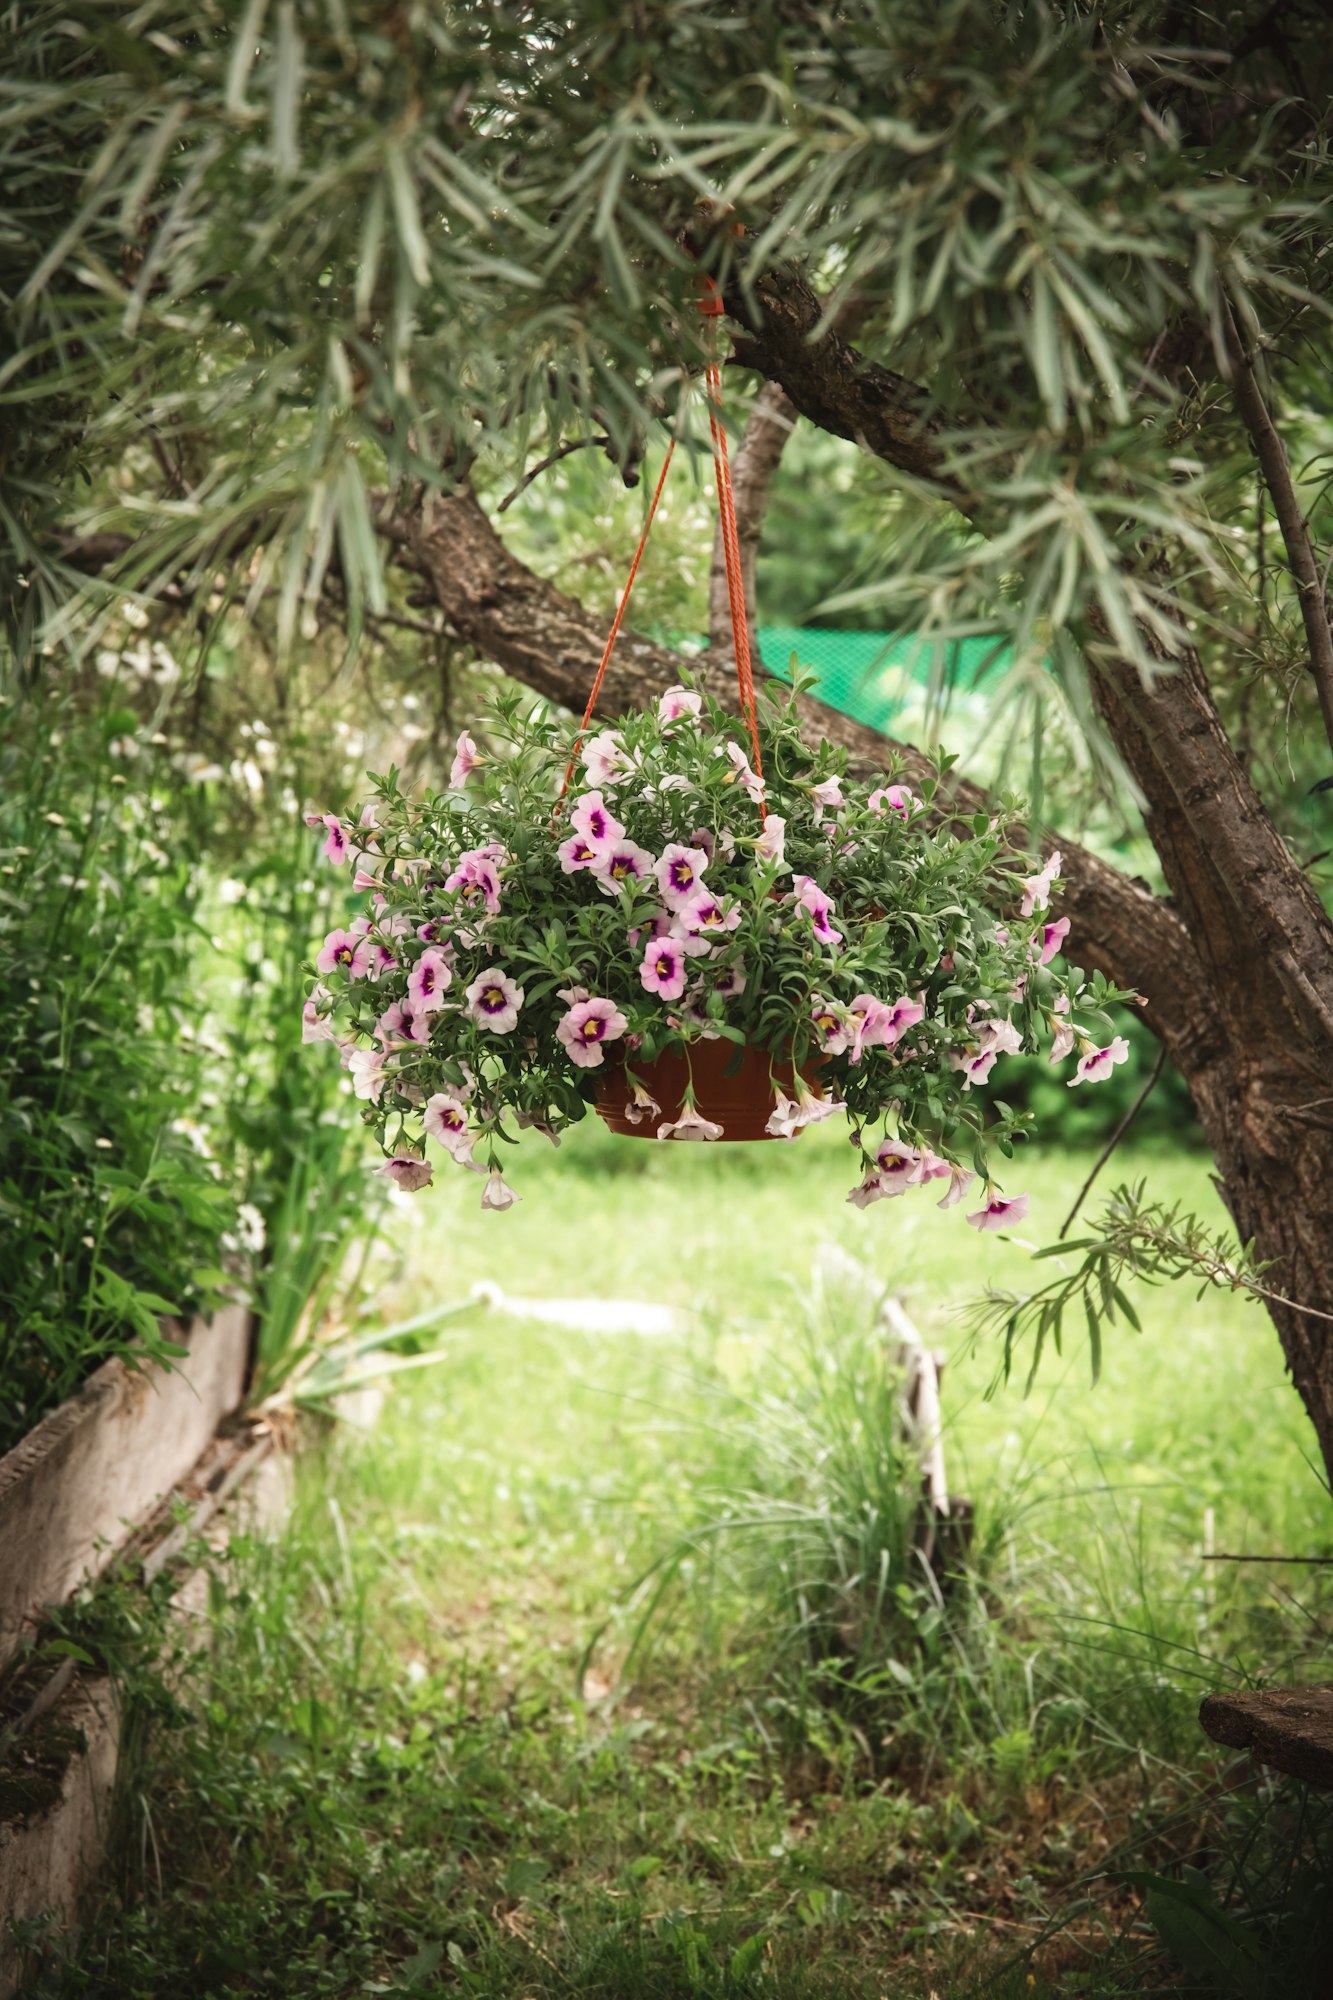 calibrachoa bushs in a hanging baskets outdoors